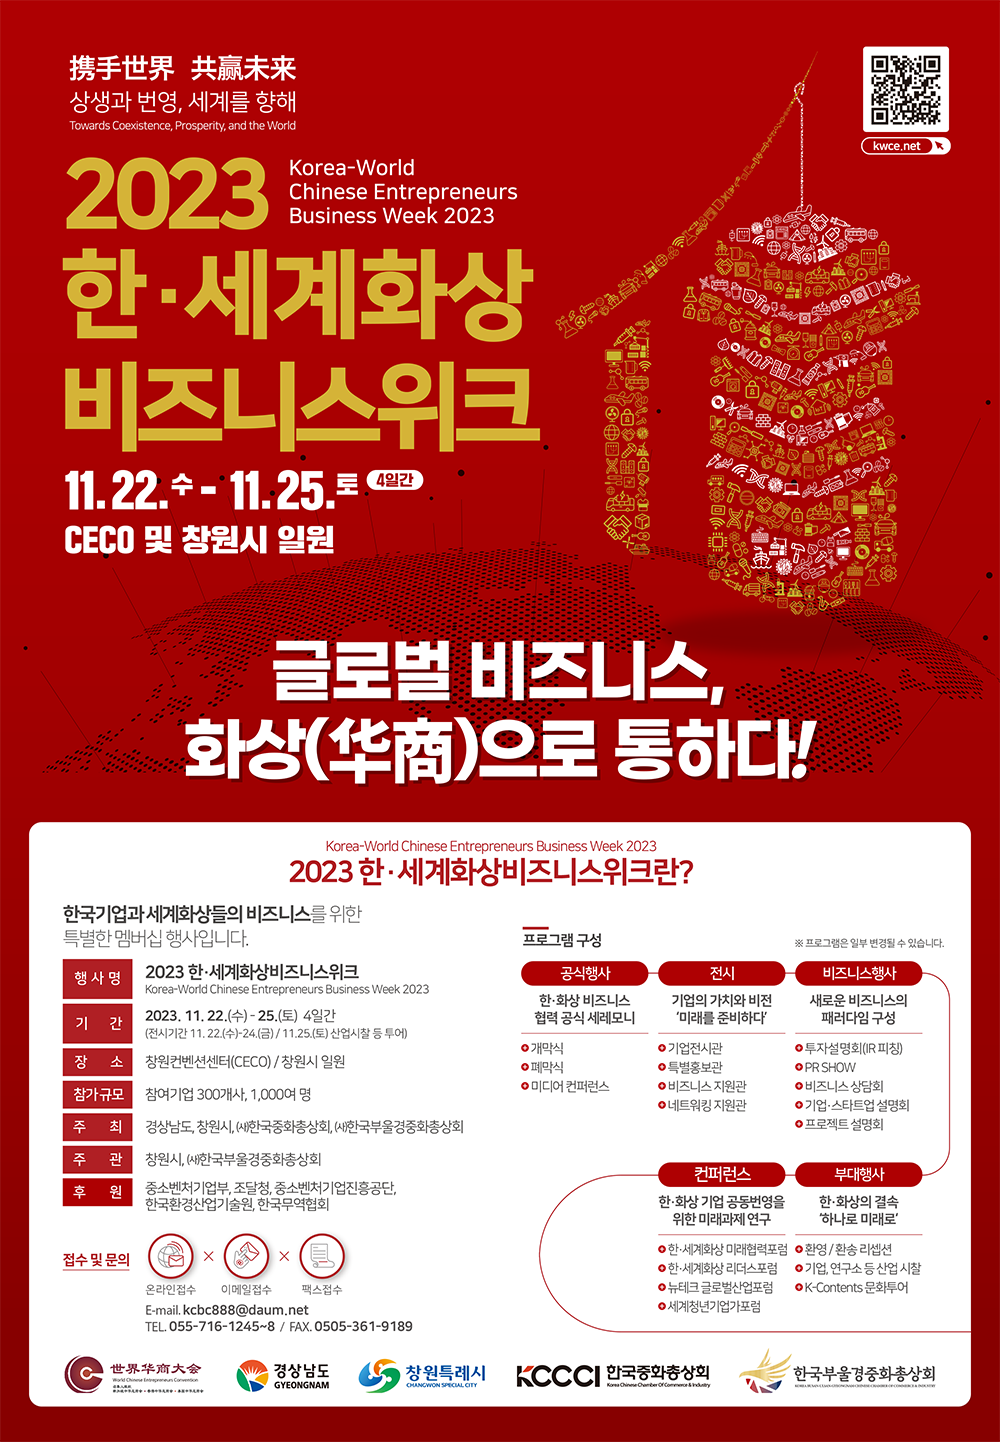 携手世界 共赢未来(휴수세계 공영미래) 상생과 번영, 세계를 향해 Towards Coexistence, Prosperity, and the World  kwce.net 2023 한·세계화상비즈니스위크 Korea-World Chinese Entrepreneurs Business Week 2023 11월 22일 수요일 - 11월25일 토요일 4일간 CECO 및 창원시 일원  글로벌 비즈니스, 화상(华商)으로 통하다! Korea-World Chinese Entrepreneurs Business Week 2023 한·세계화상비즈니스위크란? 한국기업과 세계화상들의 비즈니스를 위한 특별한 멤버십 행사입니다. 행 사 명 - 2023 한·세계화상비즈니스위크 Korea-World Chinese Entrepreneurs Business Week 2023  기 간 - 2023. 11. 22.(수) - 25.(토) 4일간 (전시기간 11. 22.(수)-24.(금) / 11.25.(토) 산업시찰 등 투어)  장 소 - 창원컨벤션센터(CECO) / 창원시 일원  참가 규모 - 참여기업 300개사, 1,000여 명 주 최 - 경상남도, 창원시, ㈔한국중화총상회, ㈔한국부울경중화총상회 주 관 - 창원시, ㈔한국부울경중화총상회 후 원 - 중소벤처기업부, 조달청, 중소벤처기업진흥공단, 한국환경산업기술원, 한국무역협회 접수 및 문의 - 온라인접수 이메일접수 팩스접수 E-mail. kcbc888@daum.net TEL. 055-716-1245~8 / FAX. 0505-361-9189  프로그램 구성 - ※ 프로그램은 일부 변경될 수 있습니다. 공식행사:한·화상 비즈니스 협력 공식 세레모니 +개막식 +폐막식 +미디어 컨퍼런스 전시:기업의 가치와 비전 ‘미래를 준비하다’  +기업전시관  +특별홍보관  +비즈니스 지원관  +네트워킹 지원관 비즈니스행사:새로운 비즈니스의 패러다임 구성  투자설명회(IR 피칭)  PR SHOW 비즈니스 상담회 기업·스타트업 설명회 프로젝트 설명회 부대행사:한·화상의 결속 ‘하나로 미래로‘  +환영 / 환송 리셉션 +기업, 연구소 등 산업 시찰 +K-Contents 문화투어 컨퍼런스:한·화상 기업 공동번영을 위한 미래과제 연구 +한·세계화상 미래협력포럼 +한·세계화상 리더스포럼 +뉴테크 글로벌산업포럼 +세계청년기업가포럼 世界华商大会(세계화상대회) 경상남도 창원특례시 KCCCI한국중화총상회 한국부울경중화총상회
<br>
<br>
<br>